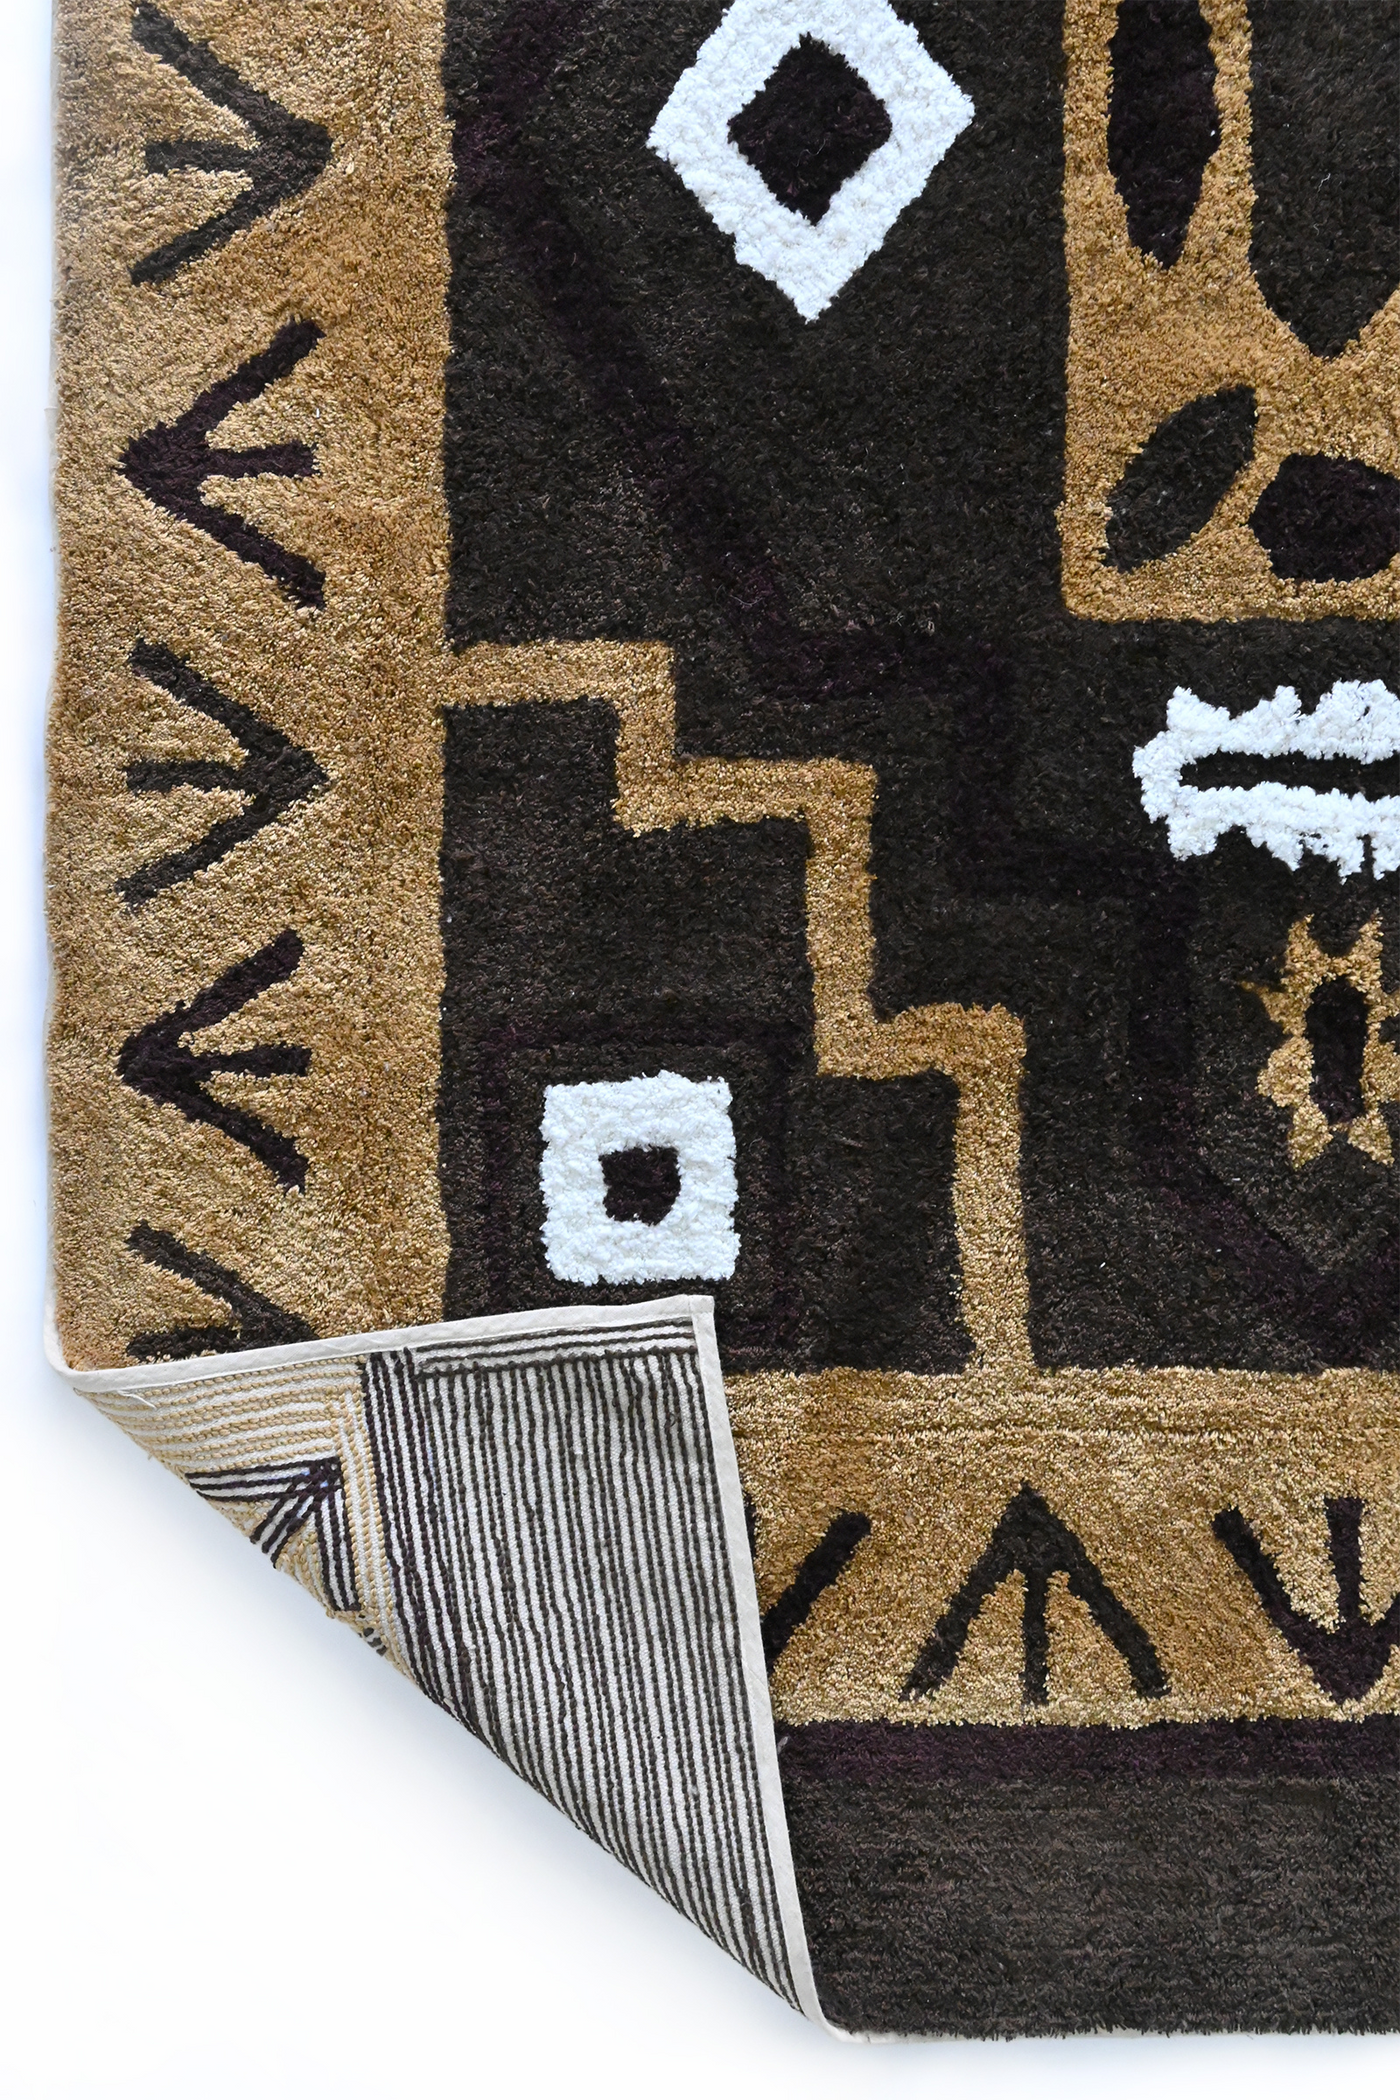 Earthy vintage tufted rugs